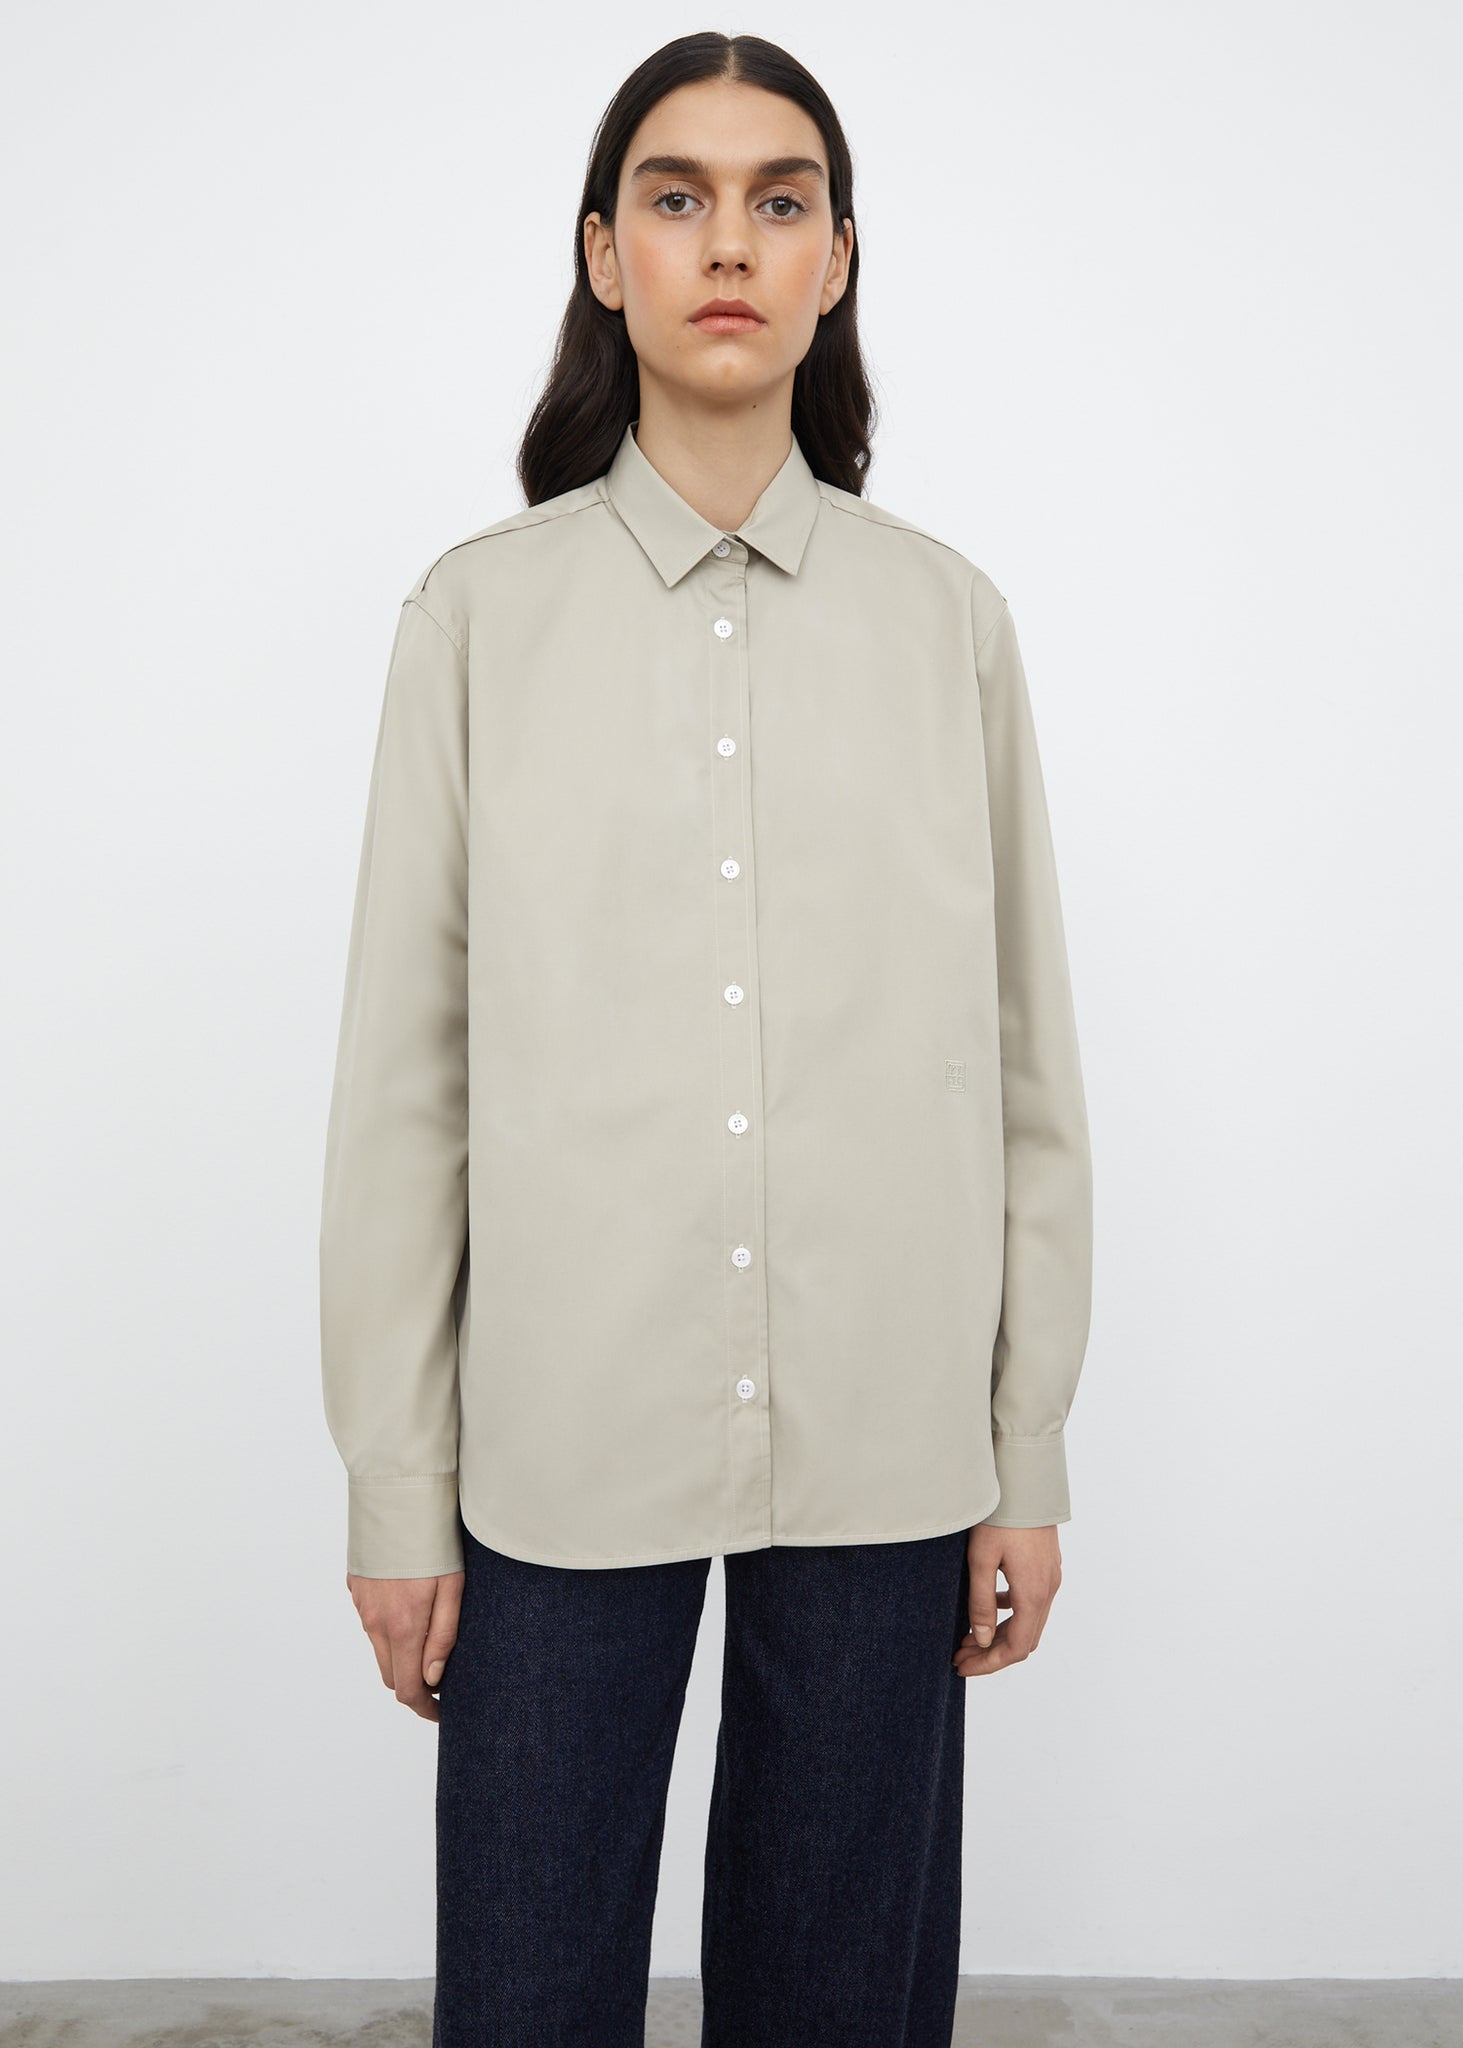 Toteme Signature cotton shirt white 白シャツ | tradexautomotive.com